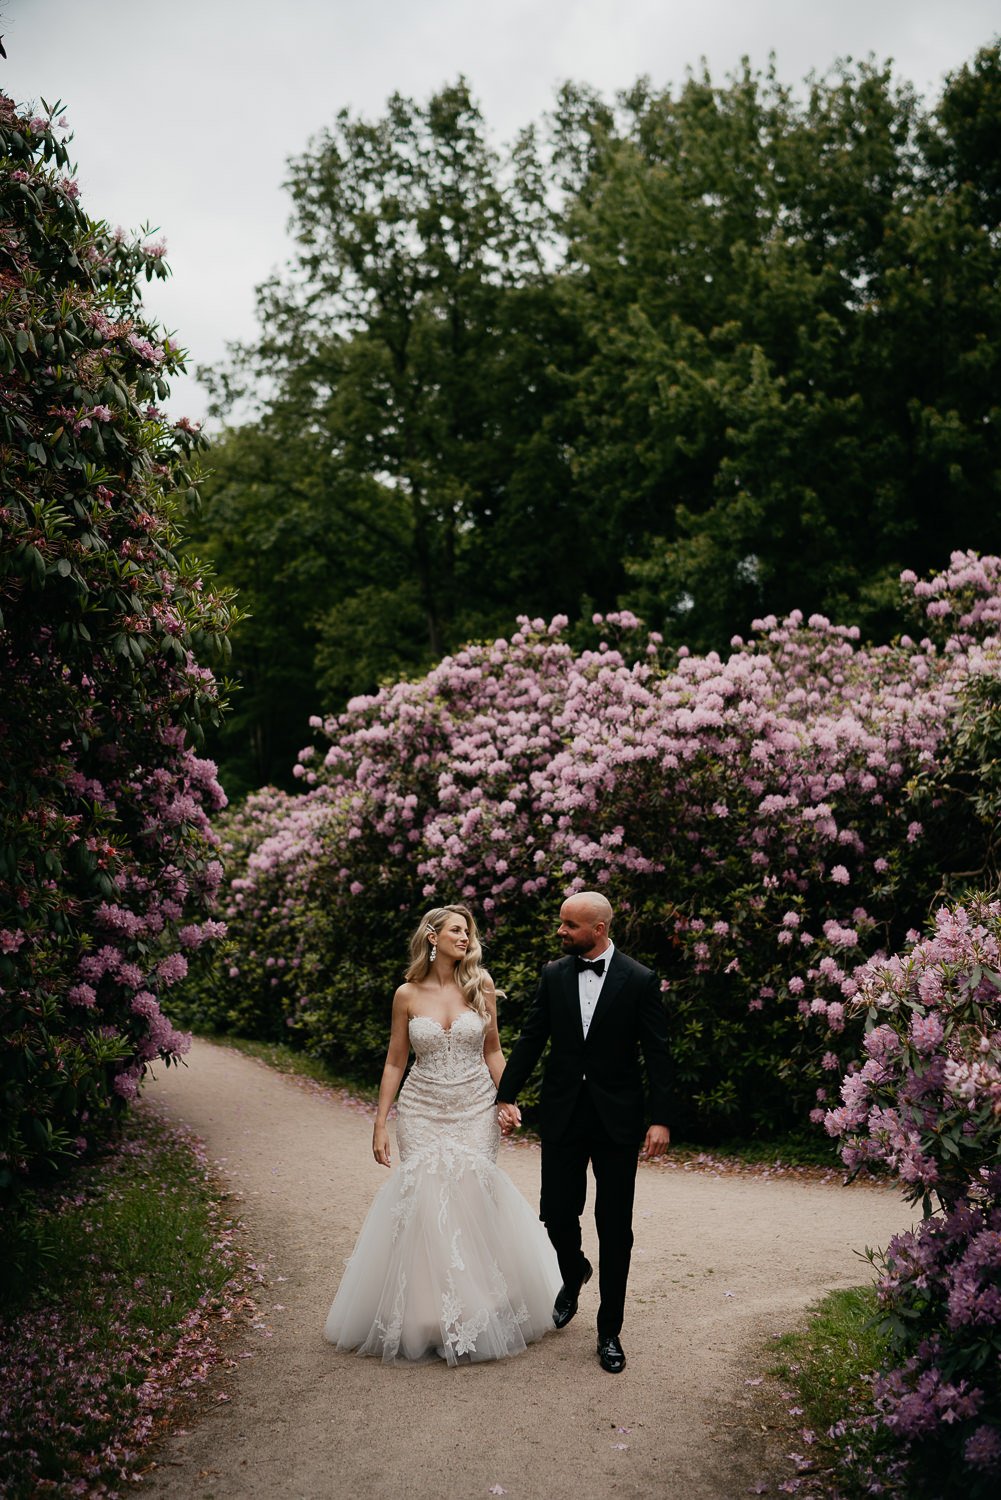 Couple walking through colourful gardens at Landgoed Rhederoord Wedding. Photographed by mark hadden amsterdam destination wedding photographer.